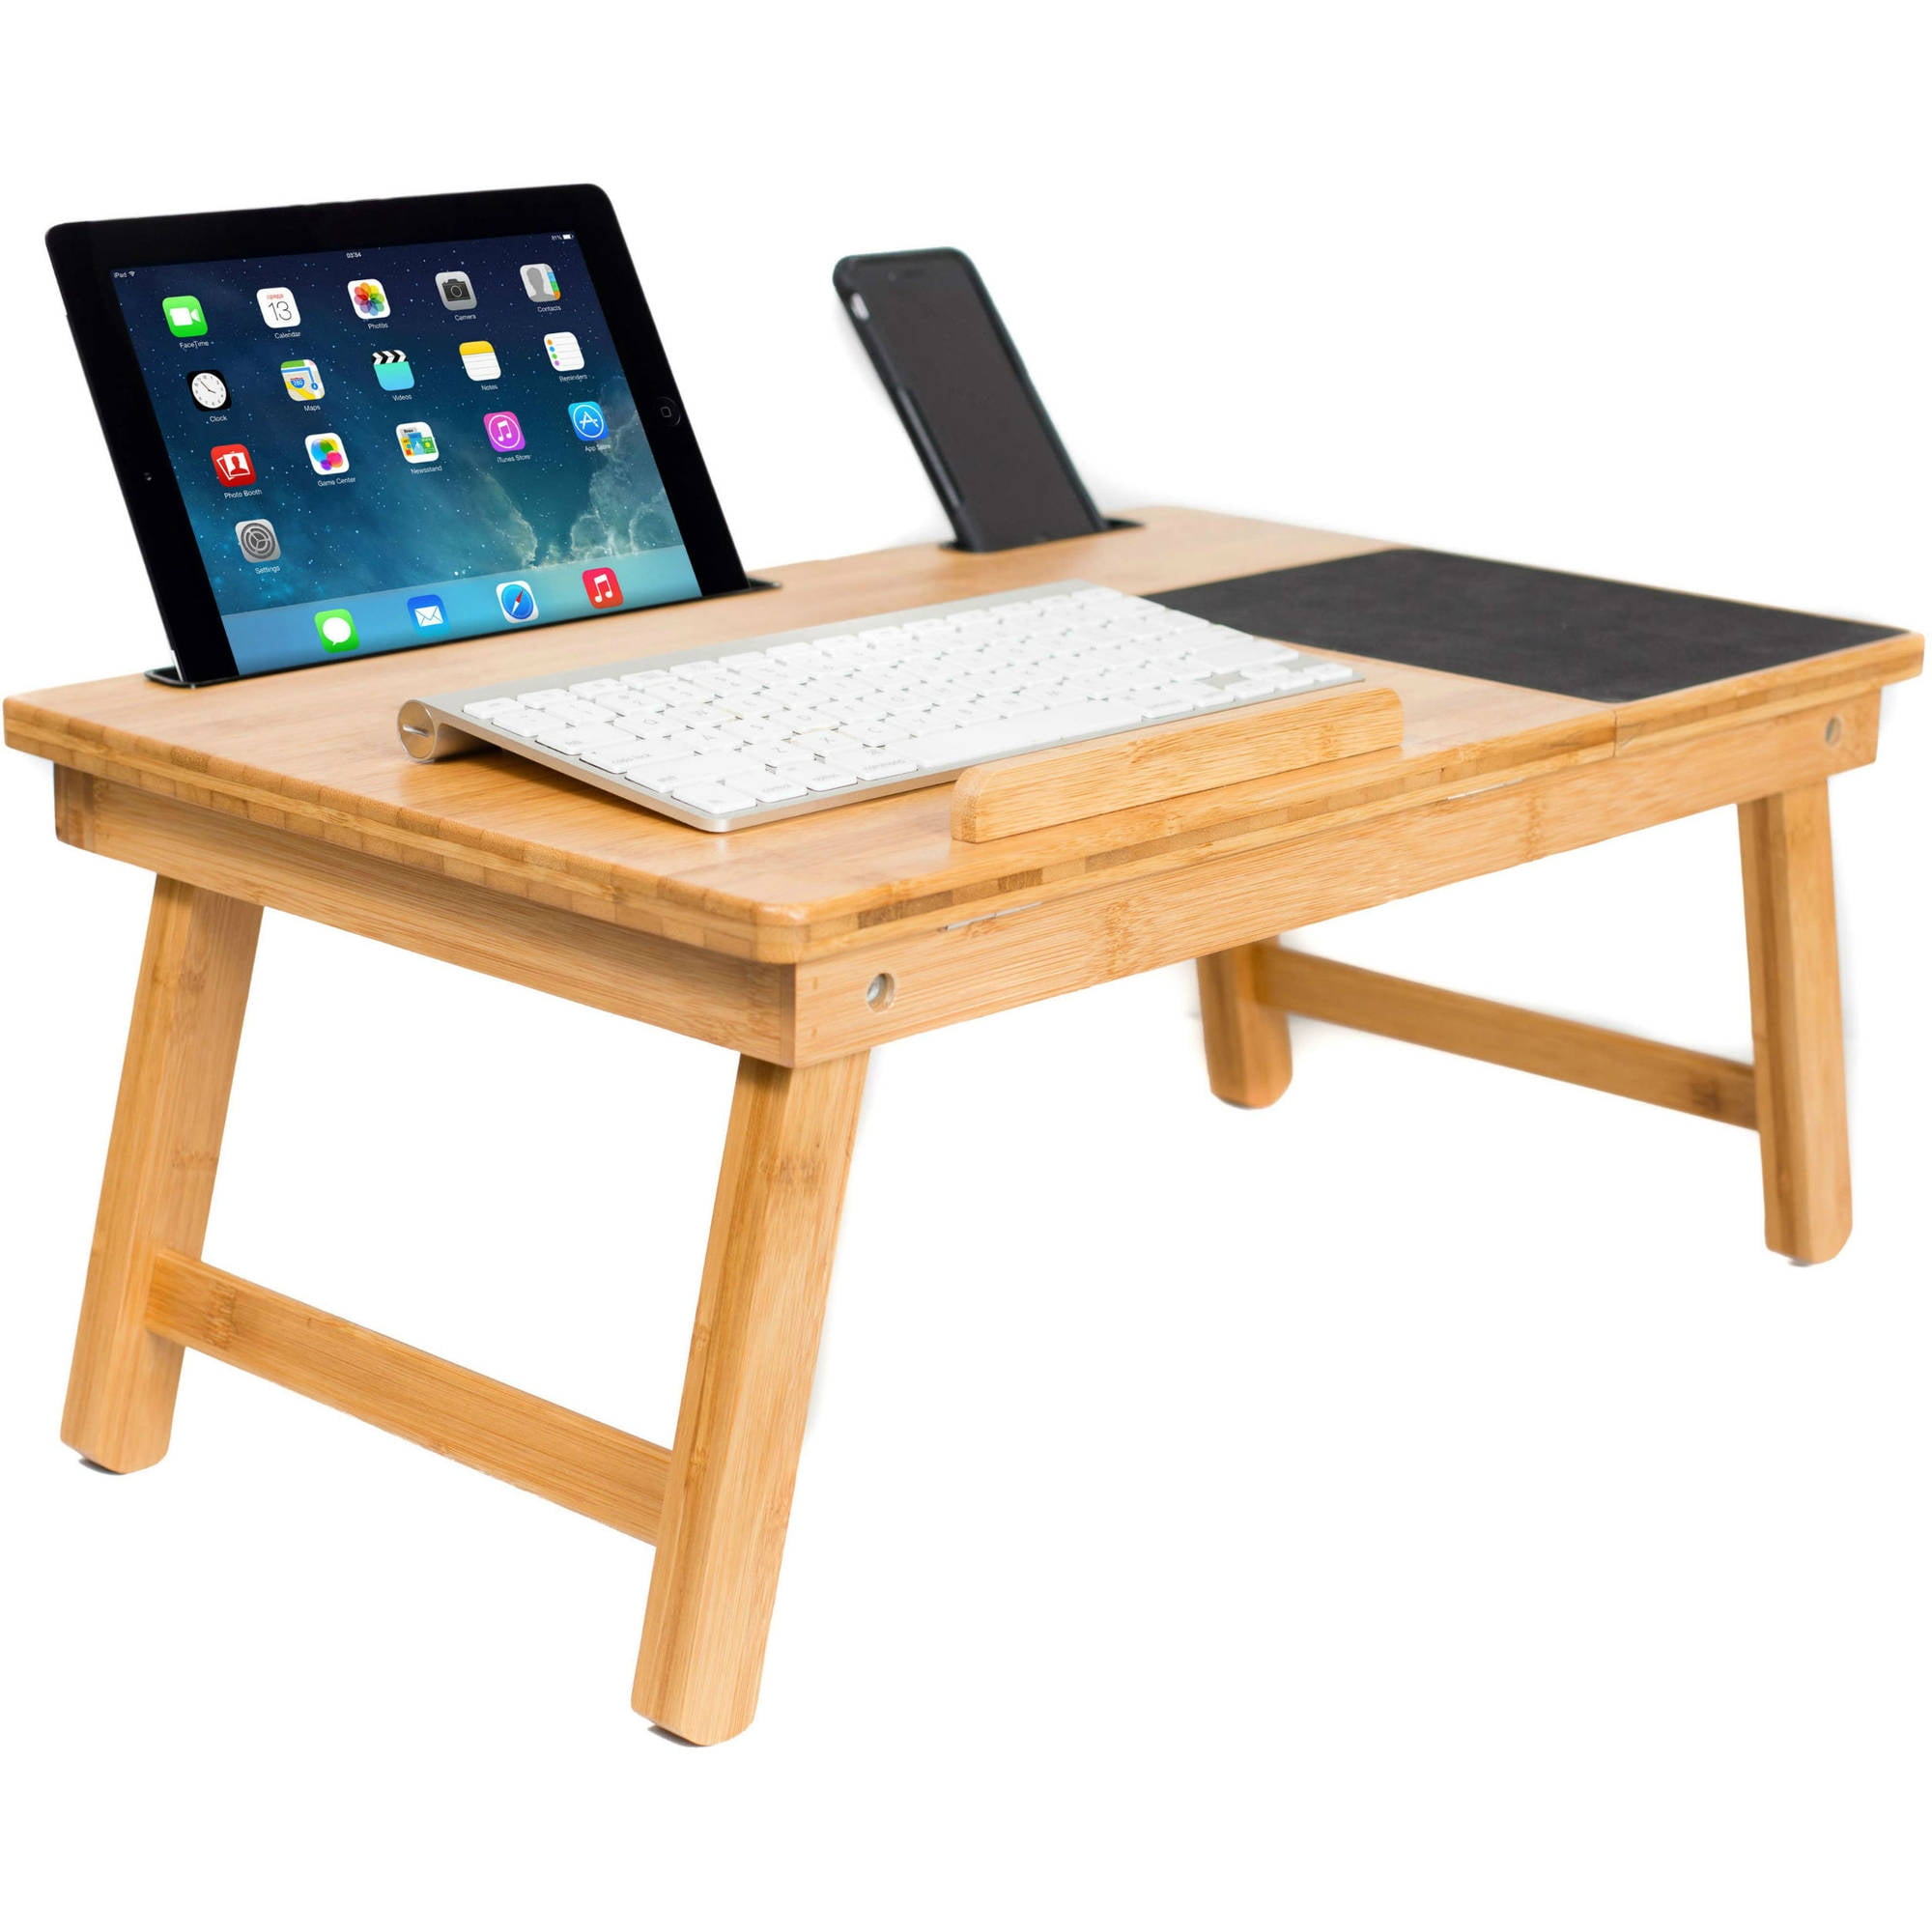 Lap Desk Supports Laptops Up to 18 Inches Sam Multi Tasking Laptop Bed Tray Sofia Walnut